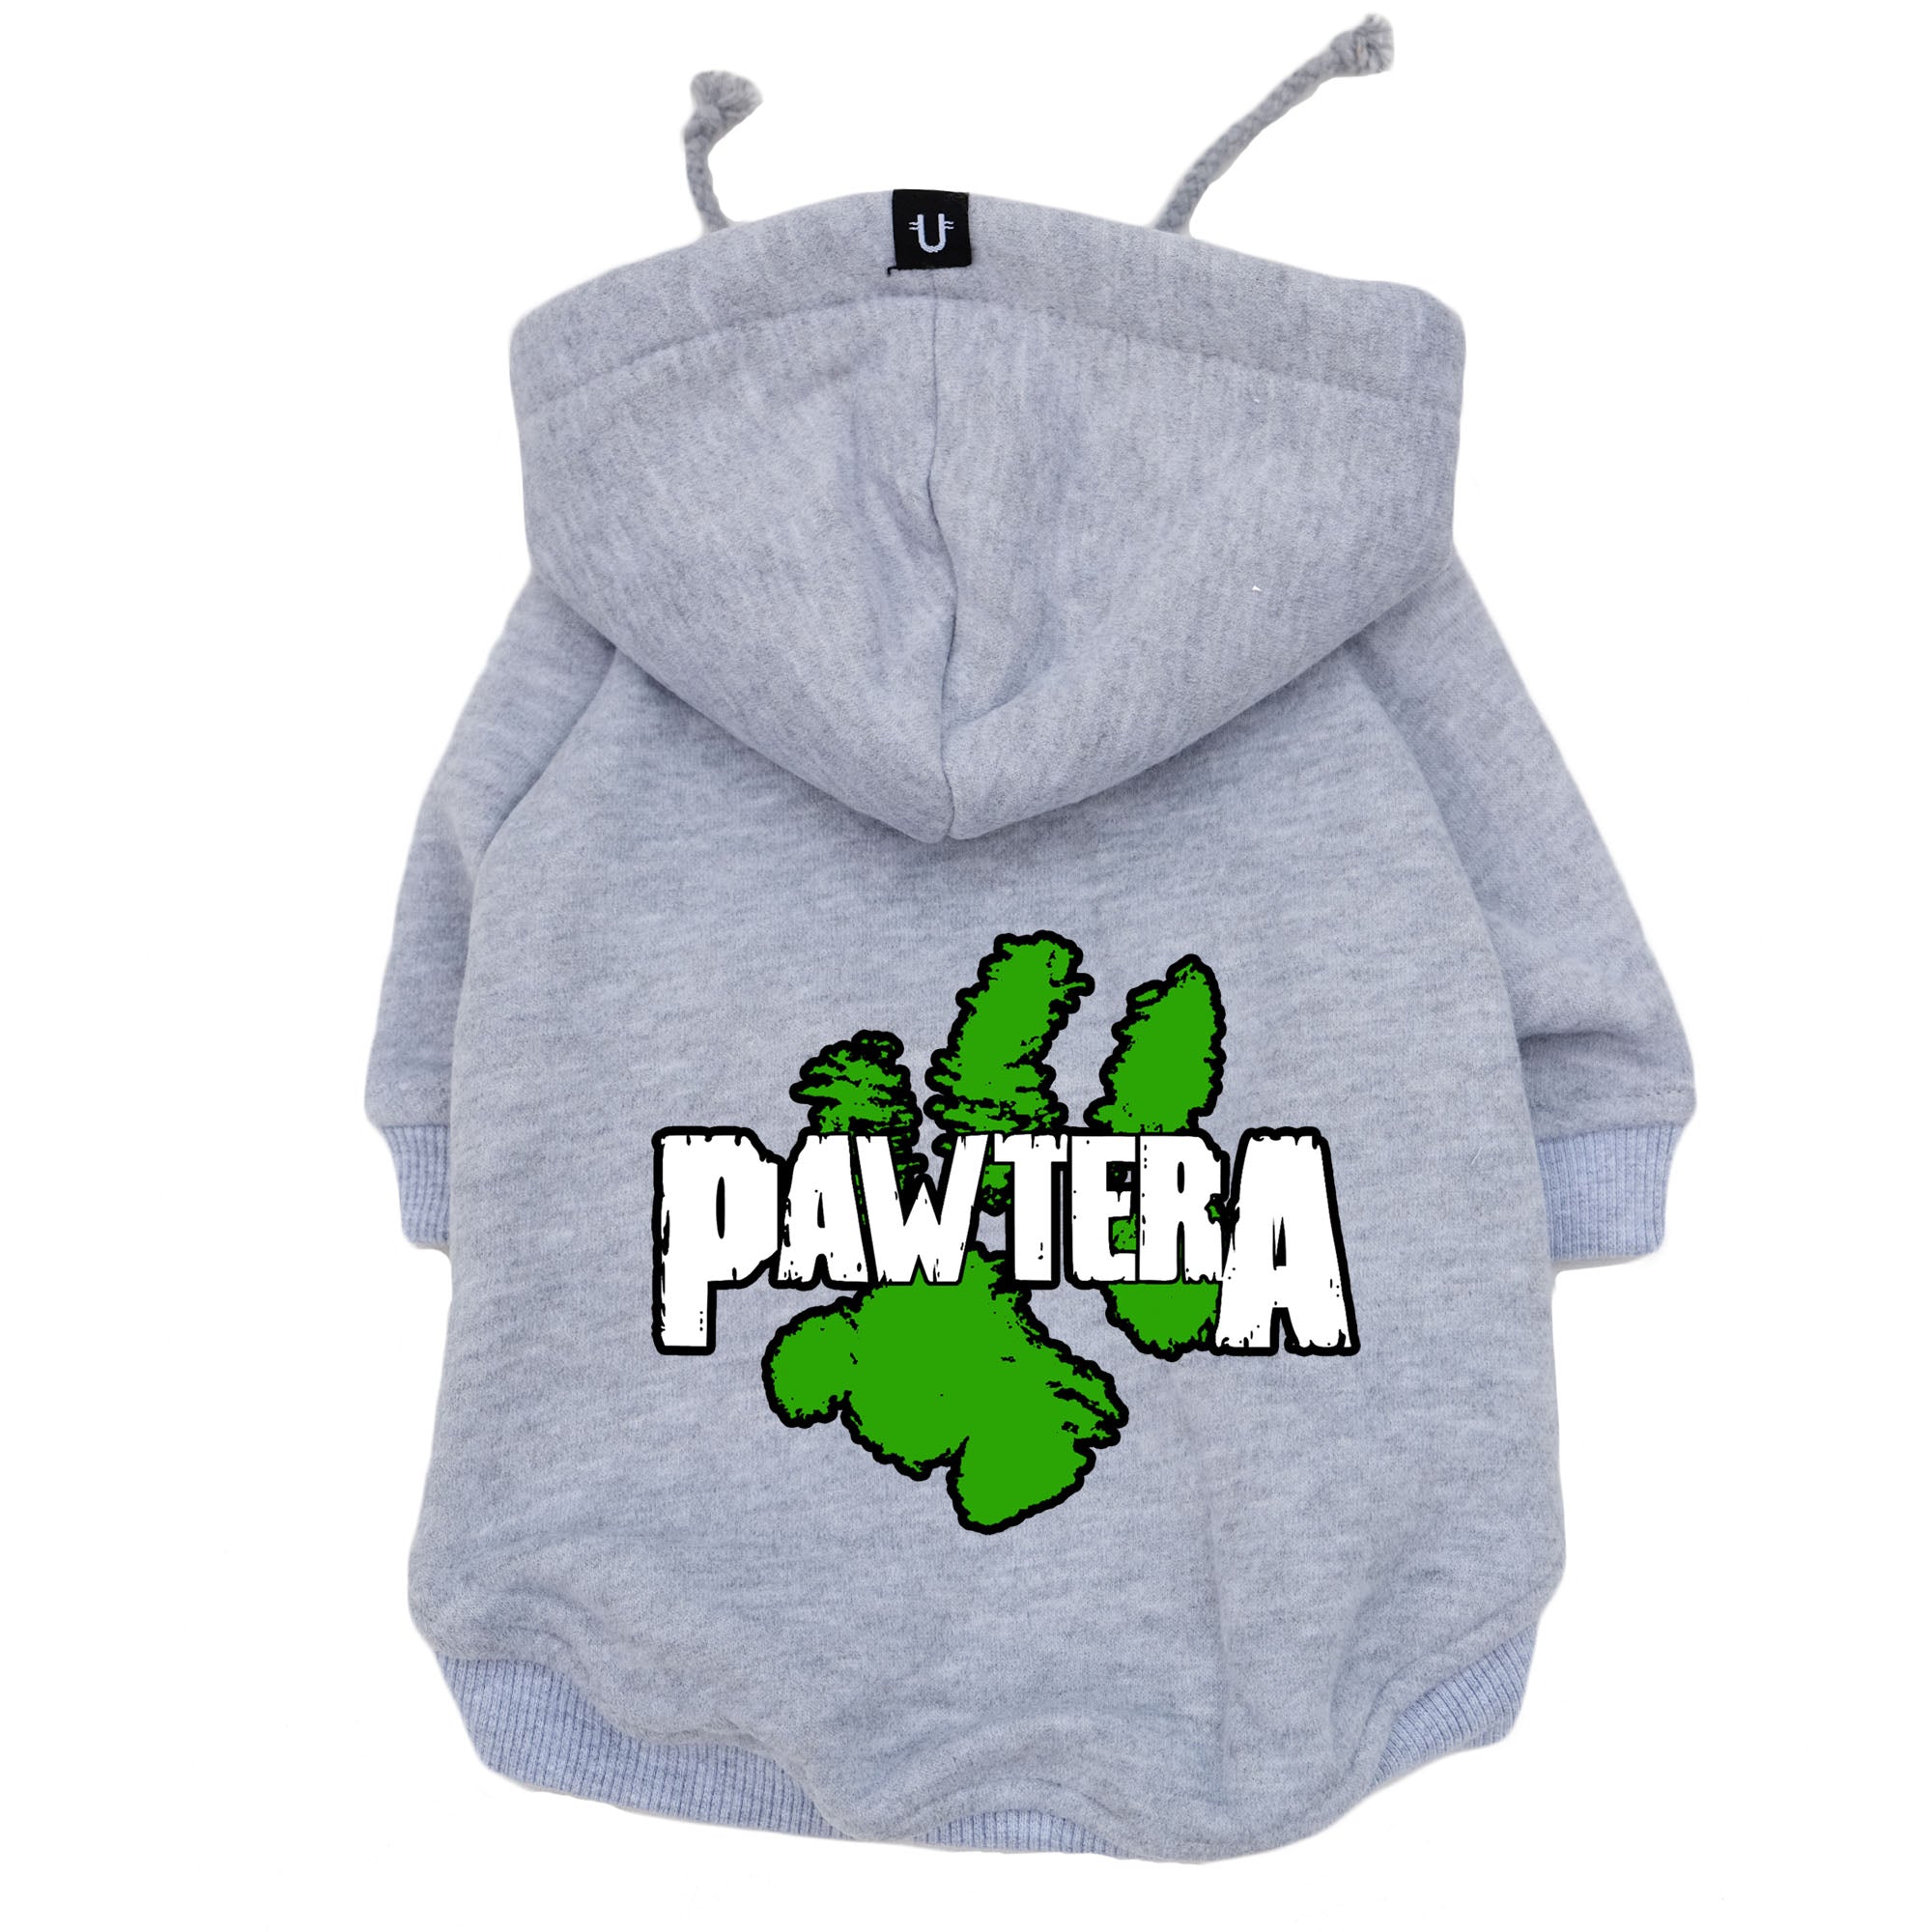 Pawtera dog hoodie, heavy metal dog hoodie, dog coat australia